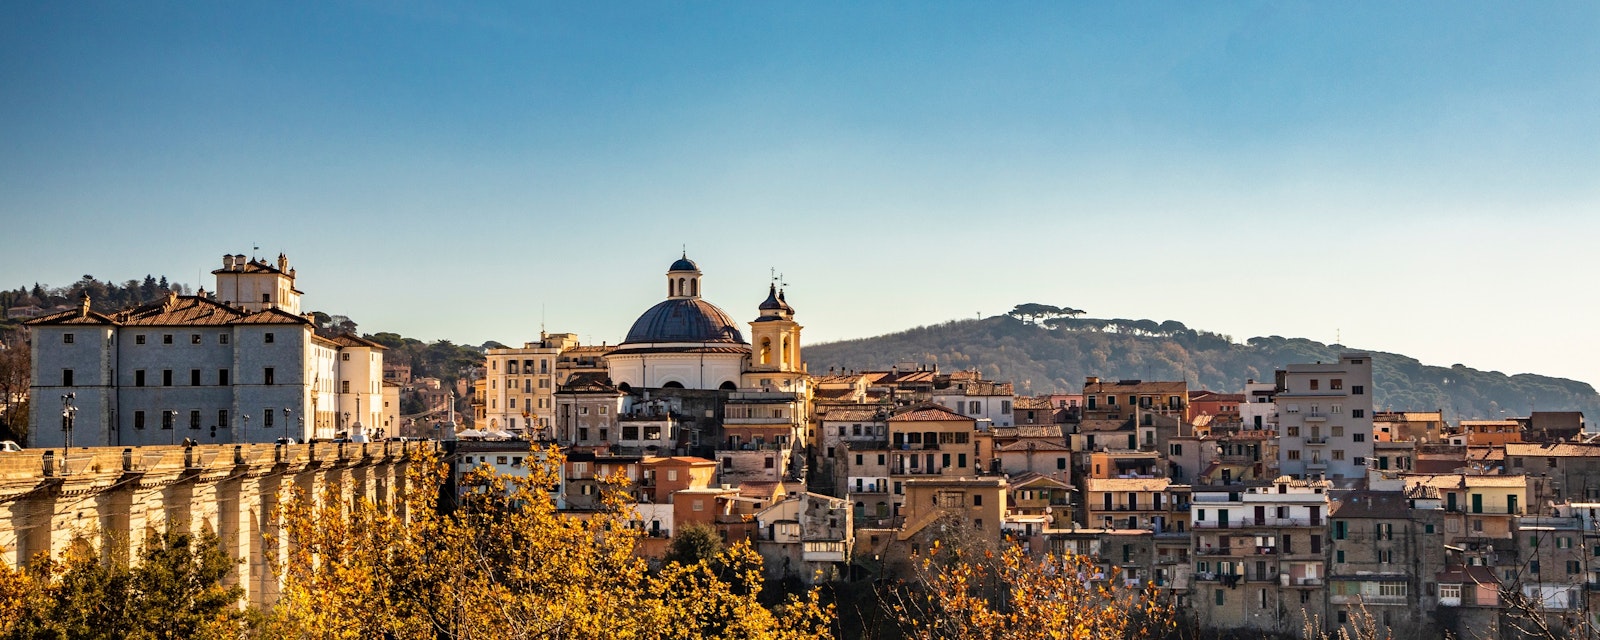 View,Of,Ariccia,,With,The,Monumental,Bridge,,The,Baroque,Chigi